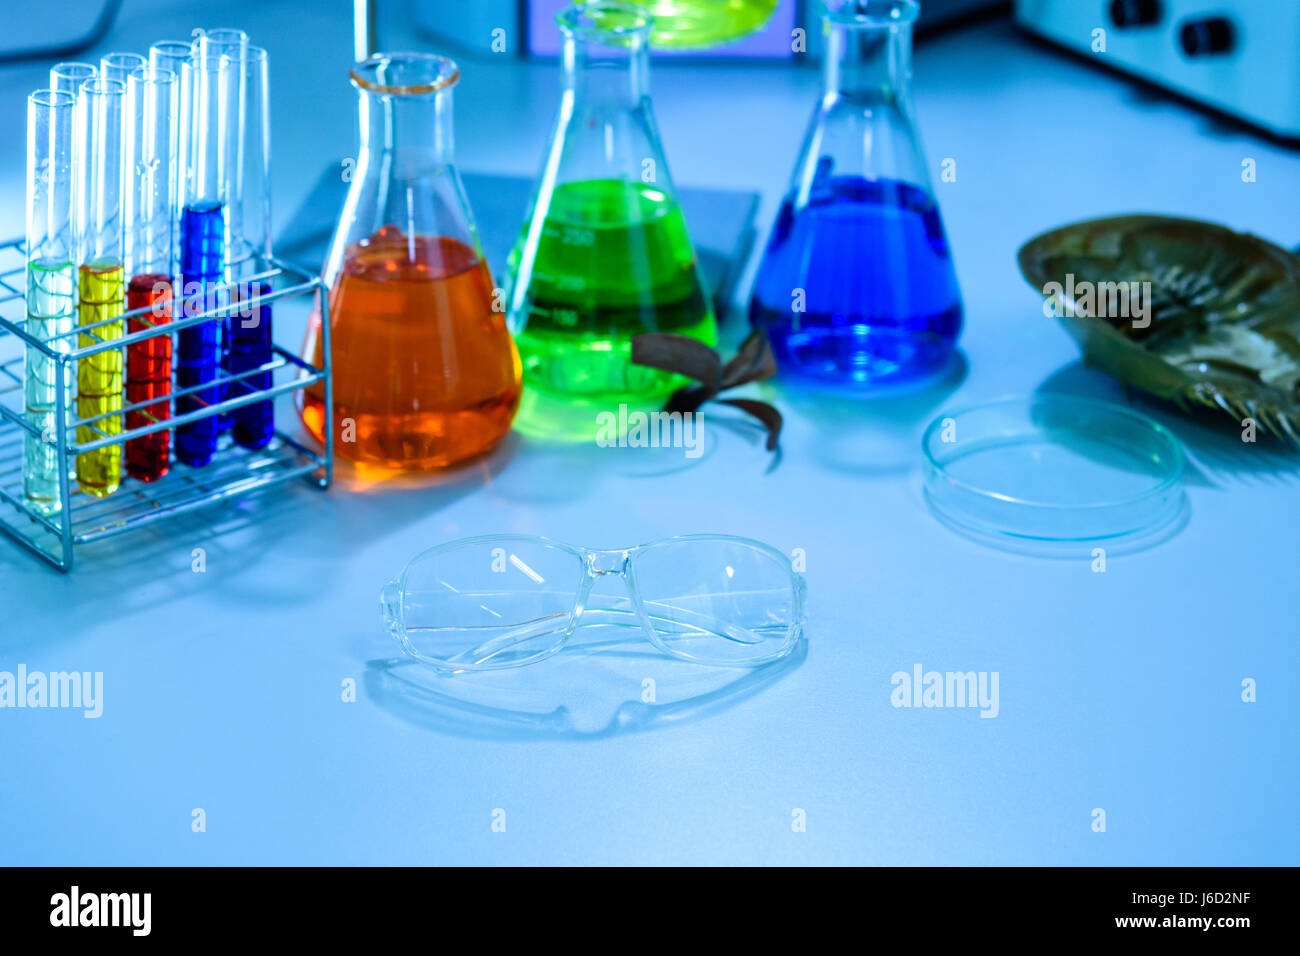 Glasses and scientific experiments in laboratory Stock Photo